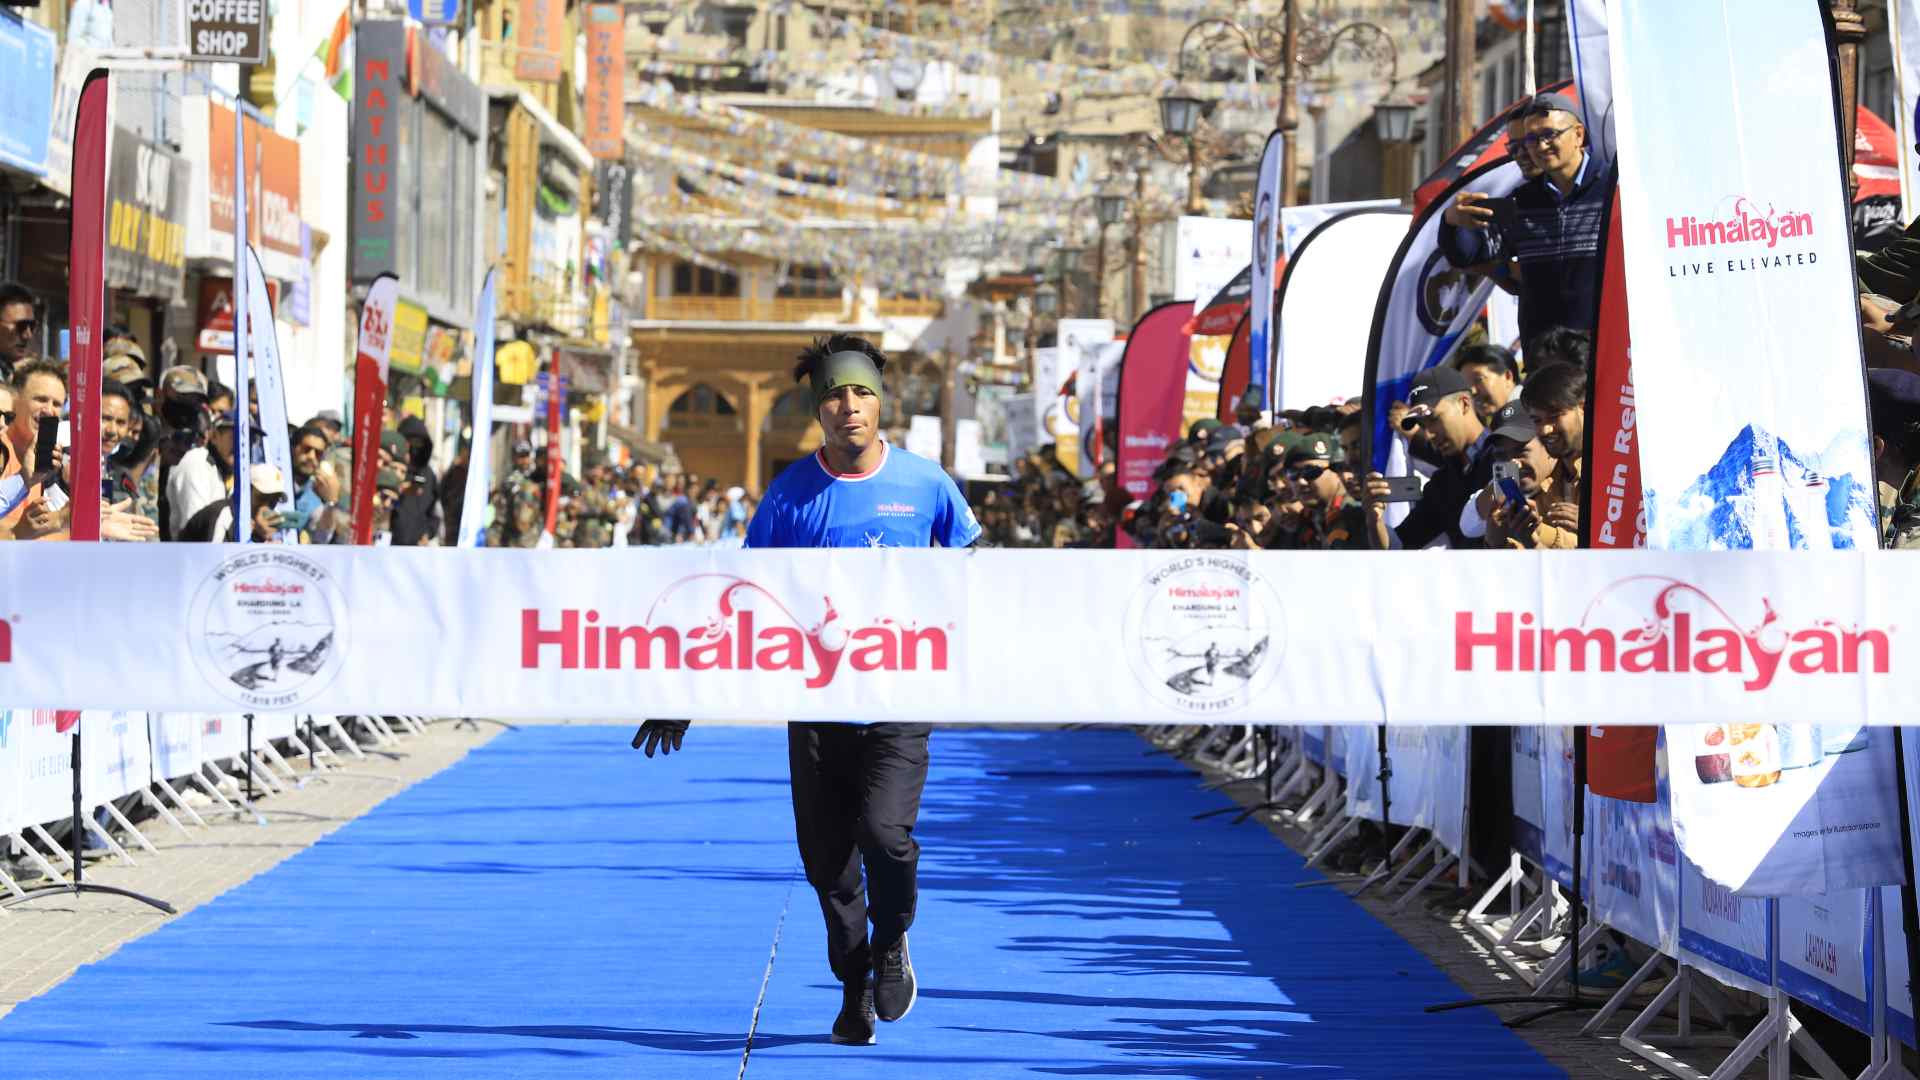 Nawaz Hussain emerged as the winner of the Himalayan Khardung La Challenge 2022.